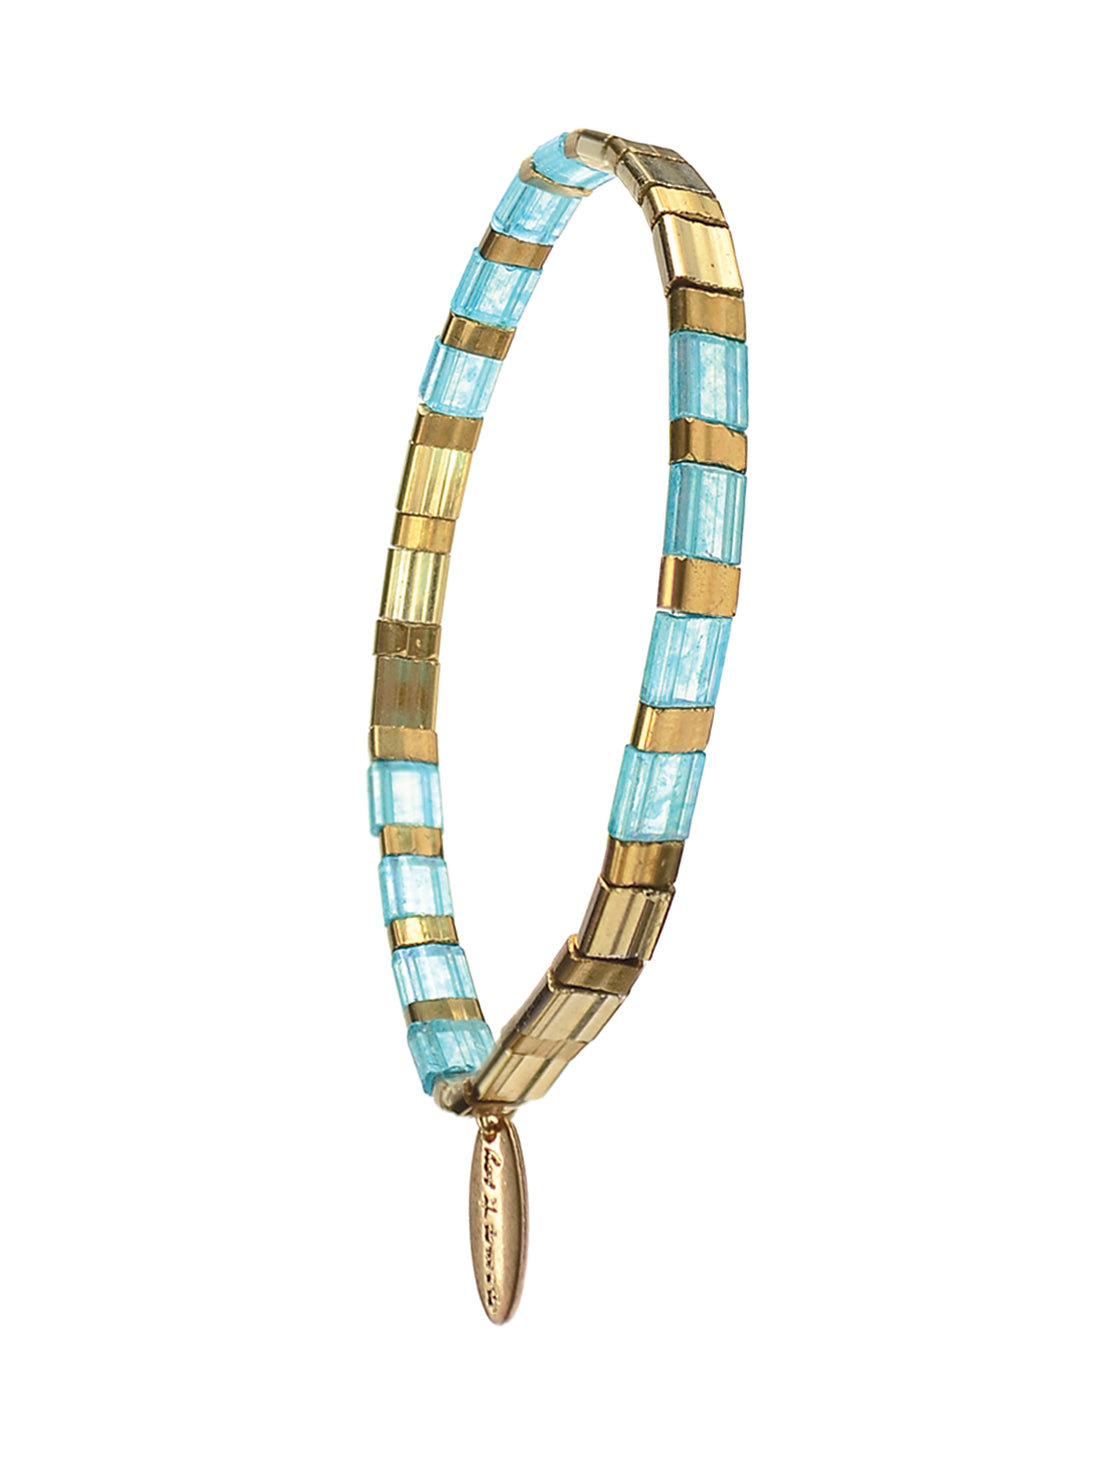 Miyuki Tile Style Glass Bead Bracelet in Turqouise and Gold - PA453